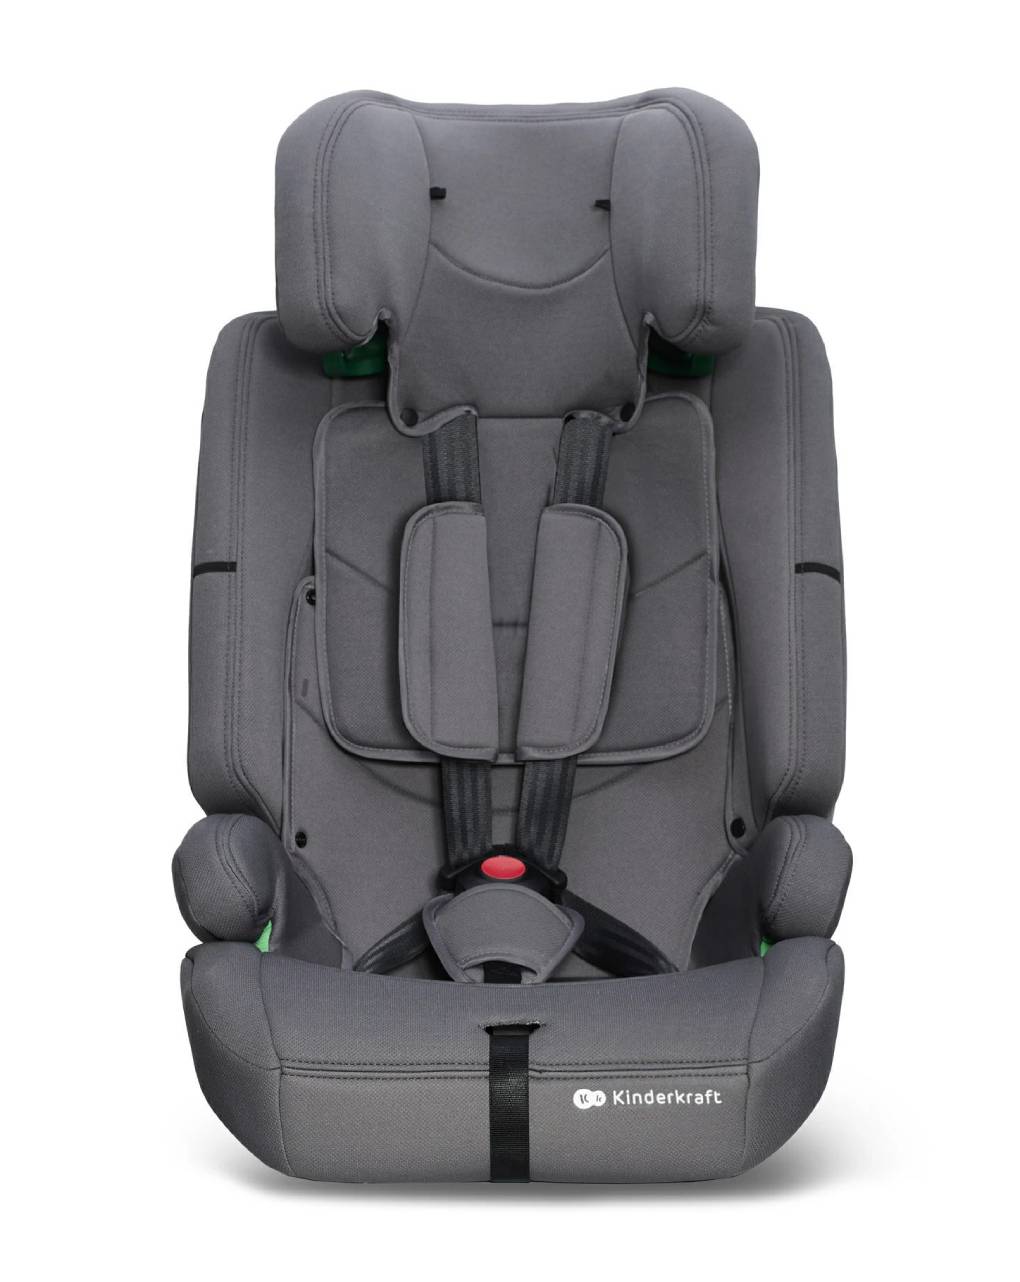 Kinderkraft κάθισμα αυτοκινήτου safety fix 2 i-size grey - Kinderkraft